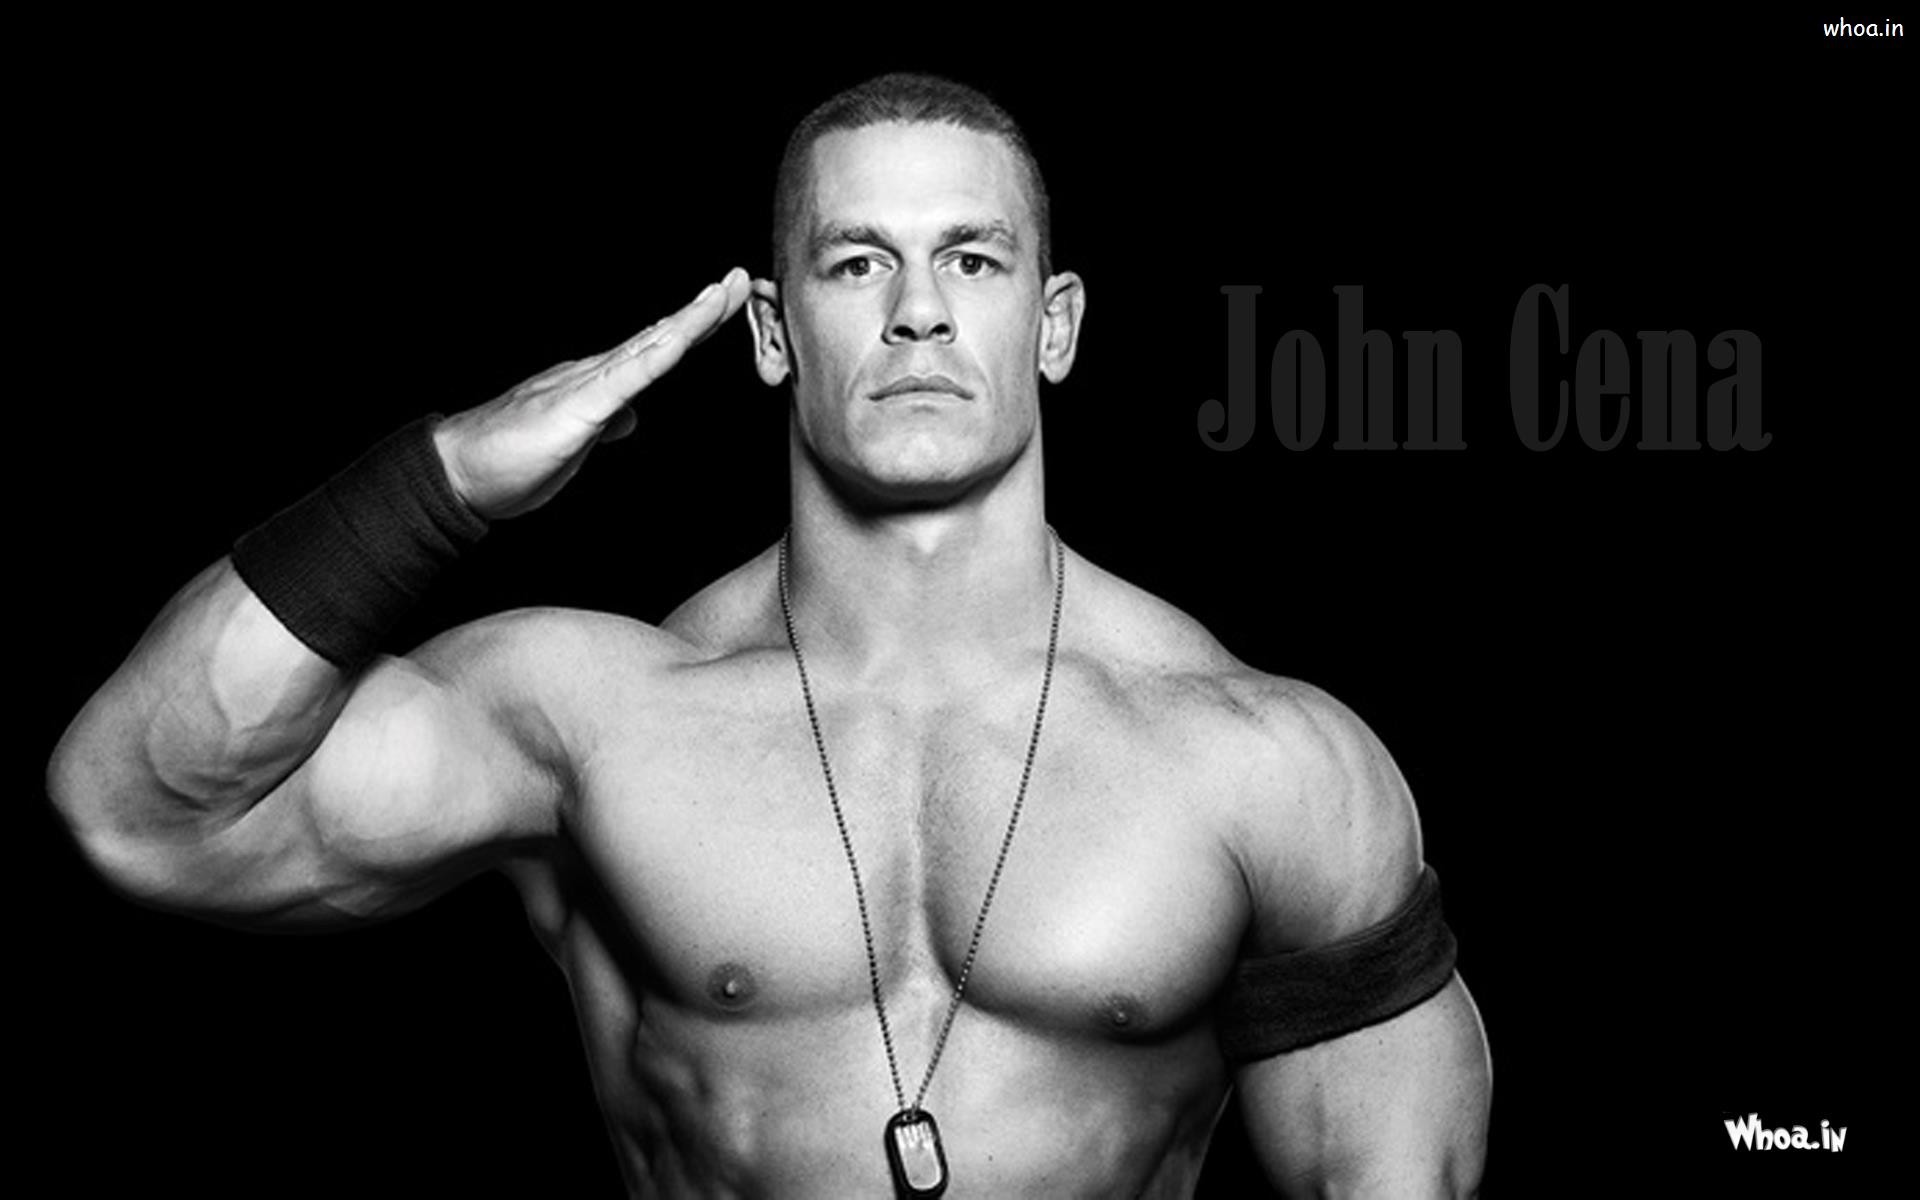 Wwe John Cena Wallpaper Bodybuilder Barechested Muscle